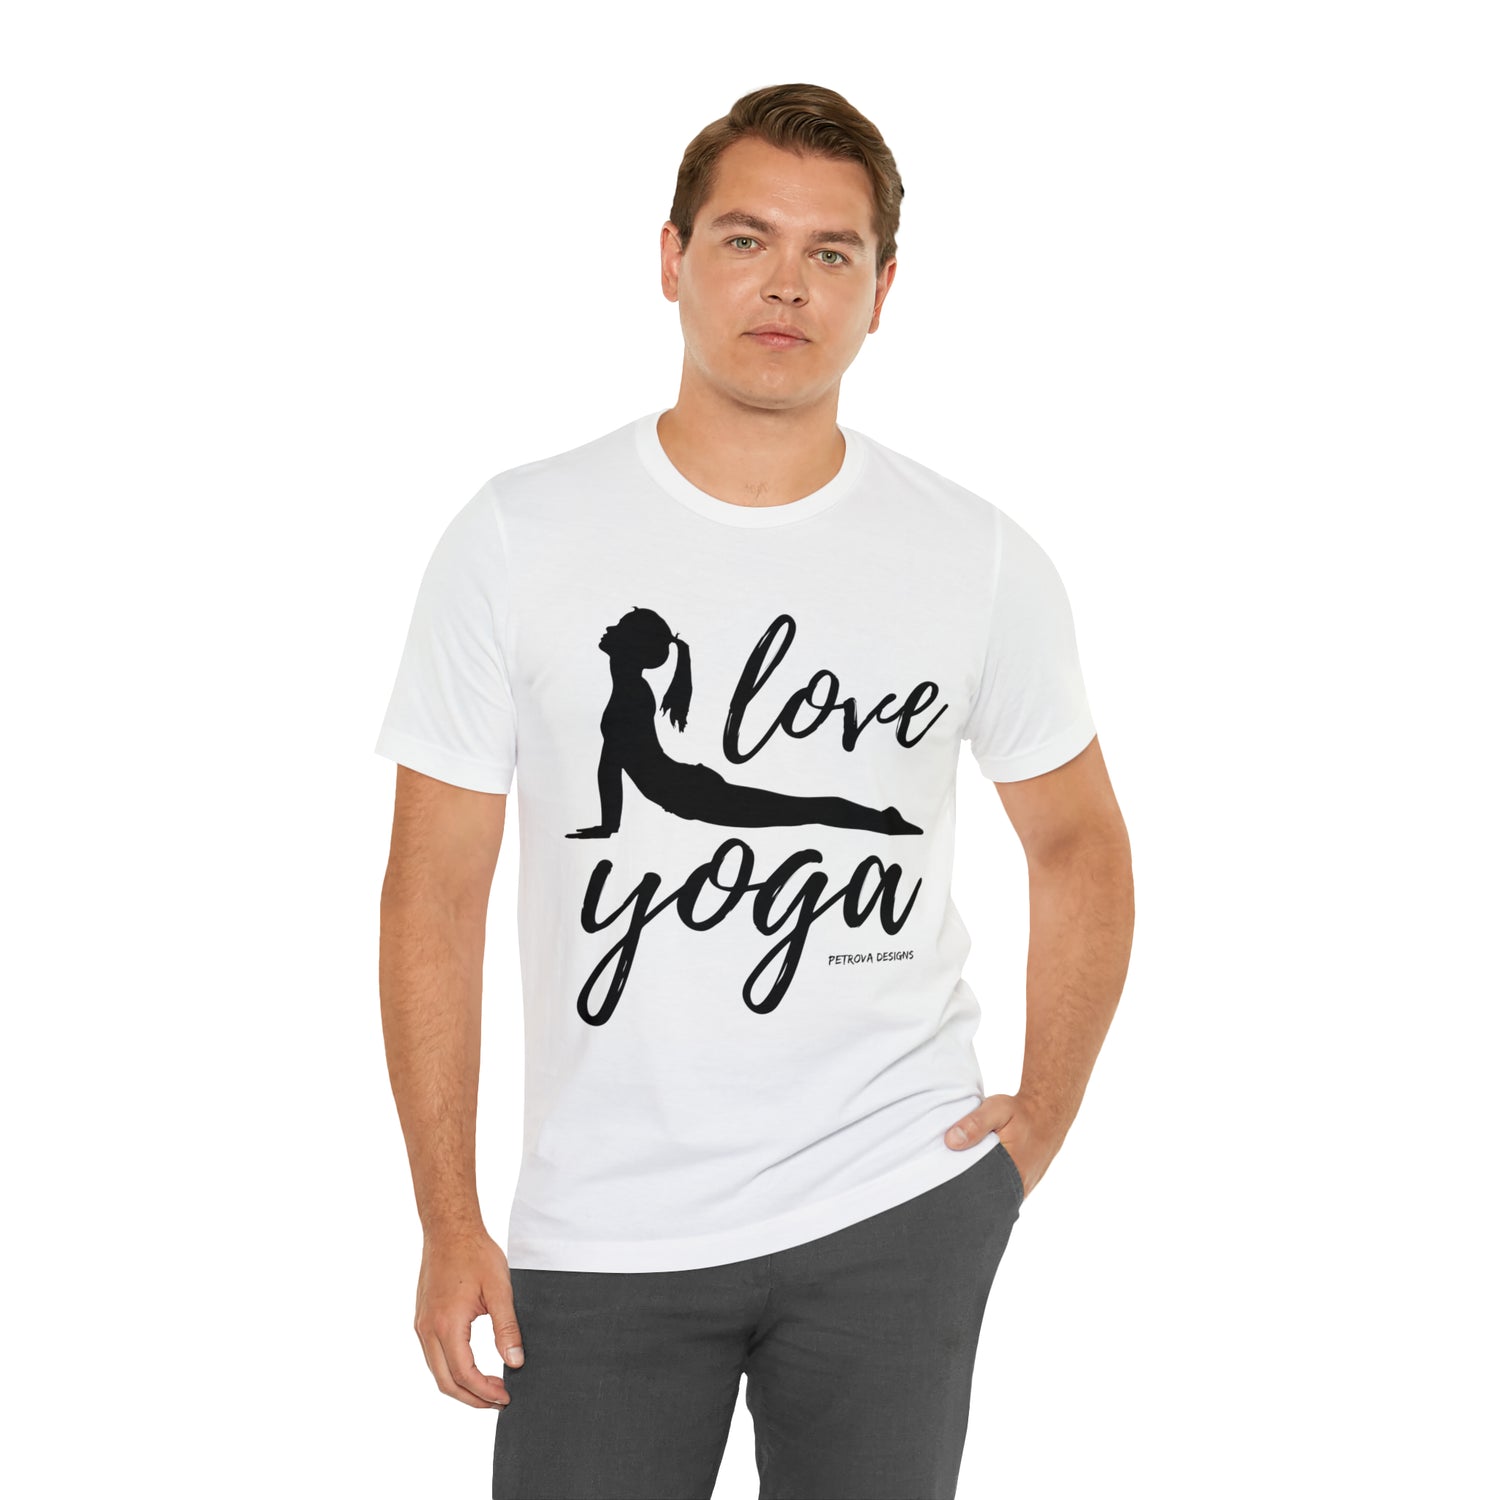 T-Shirt Tshirt Design Gift for Friend and Family Short Sleeved Shirt Yoga Petrova Designs